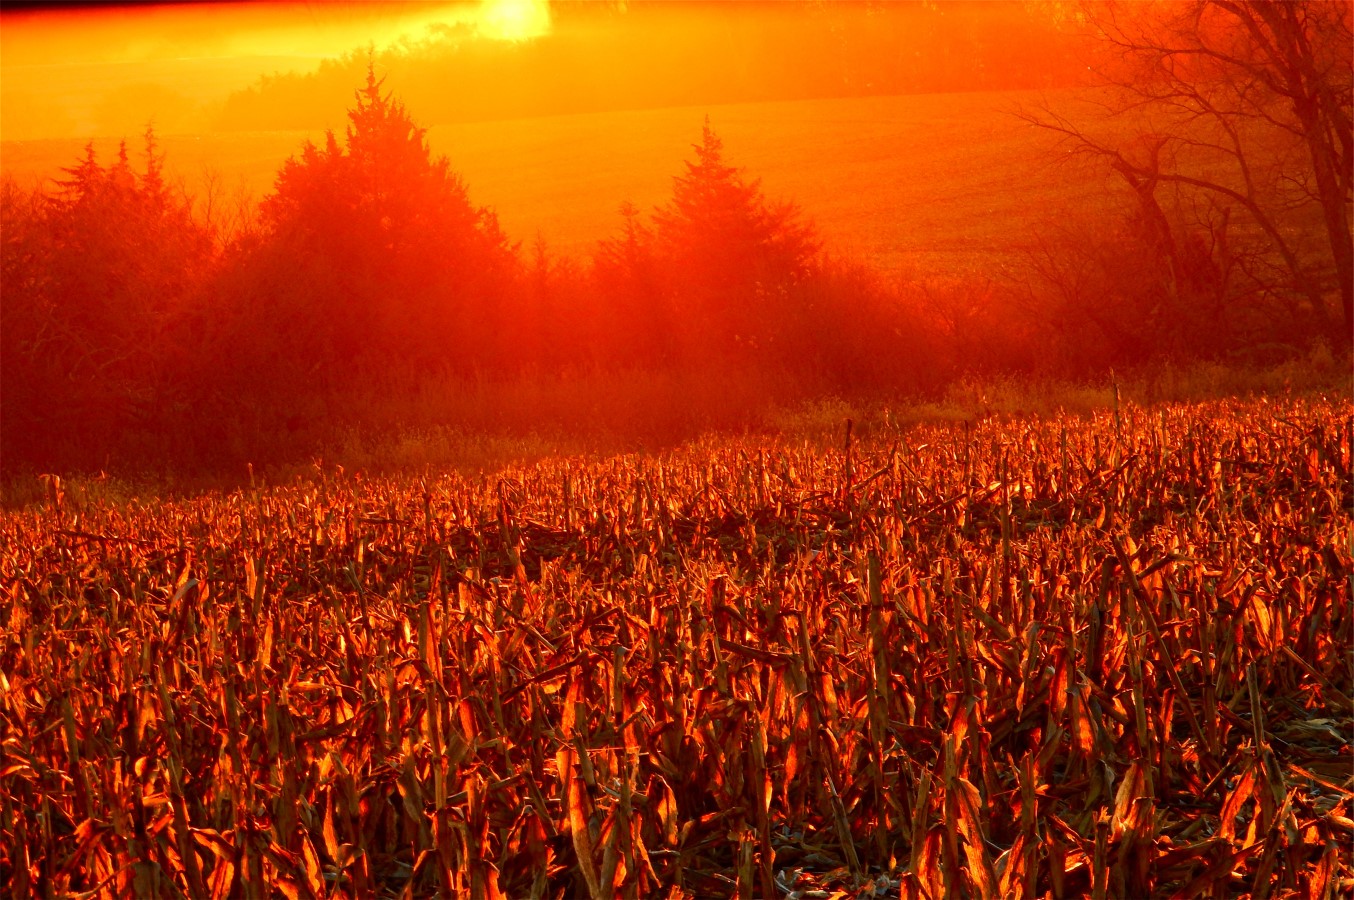 Corn Field from Deer Blind #2   11-15-16.jpg